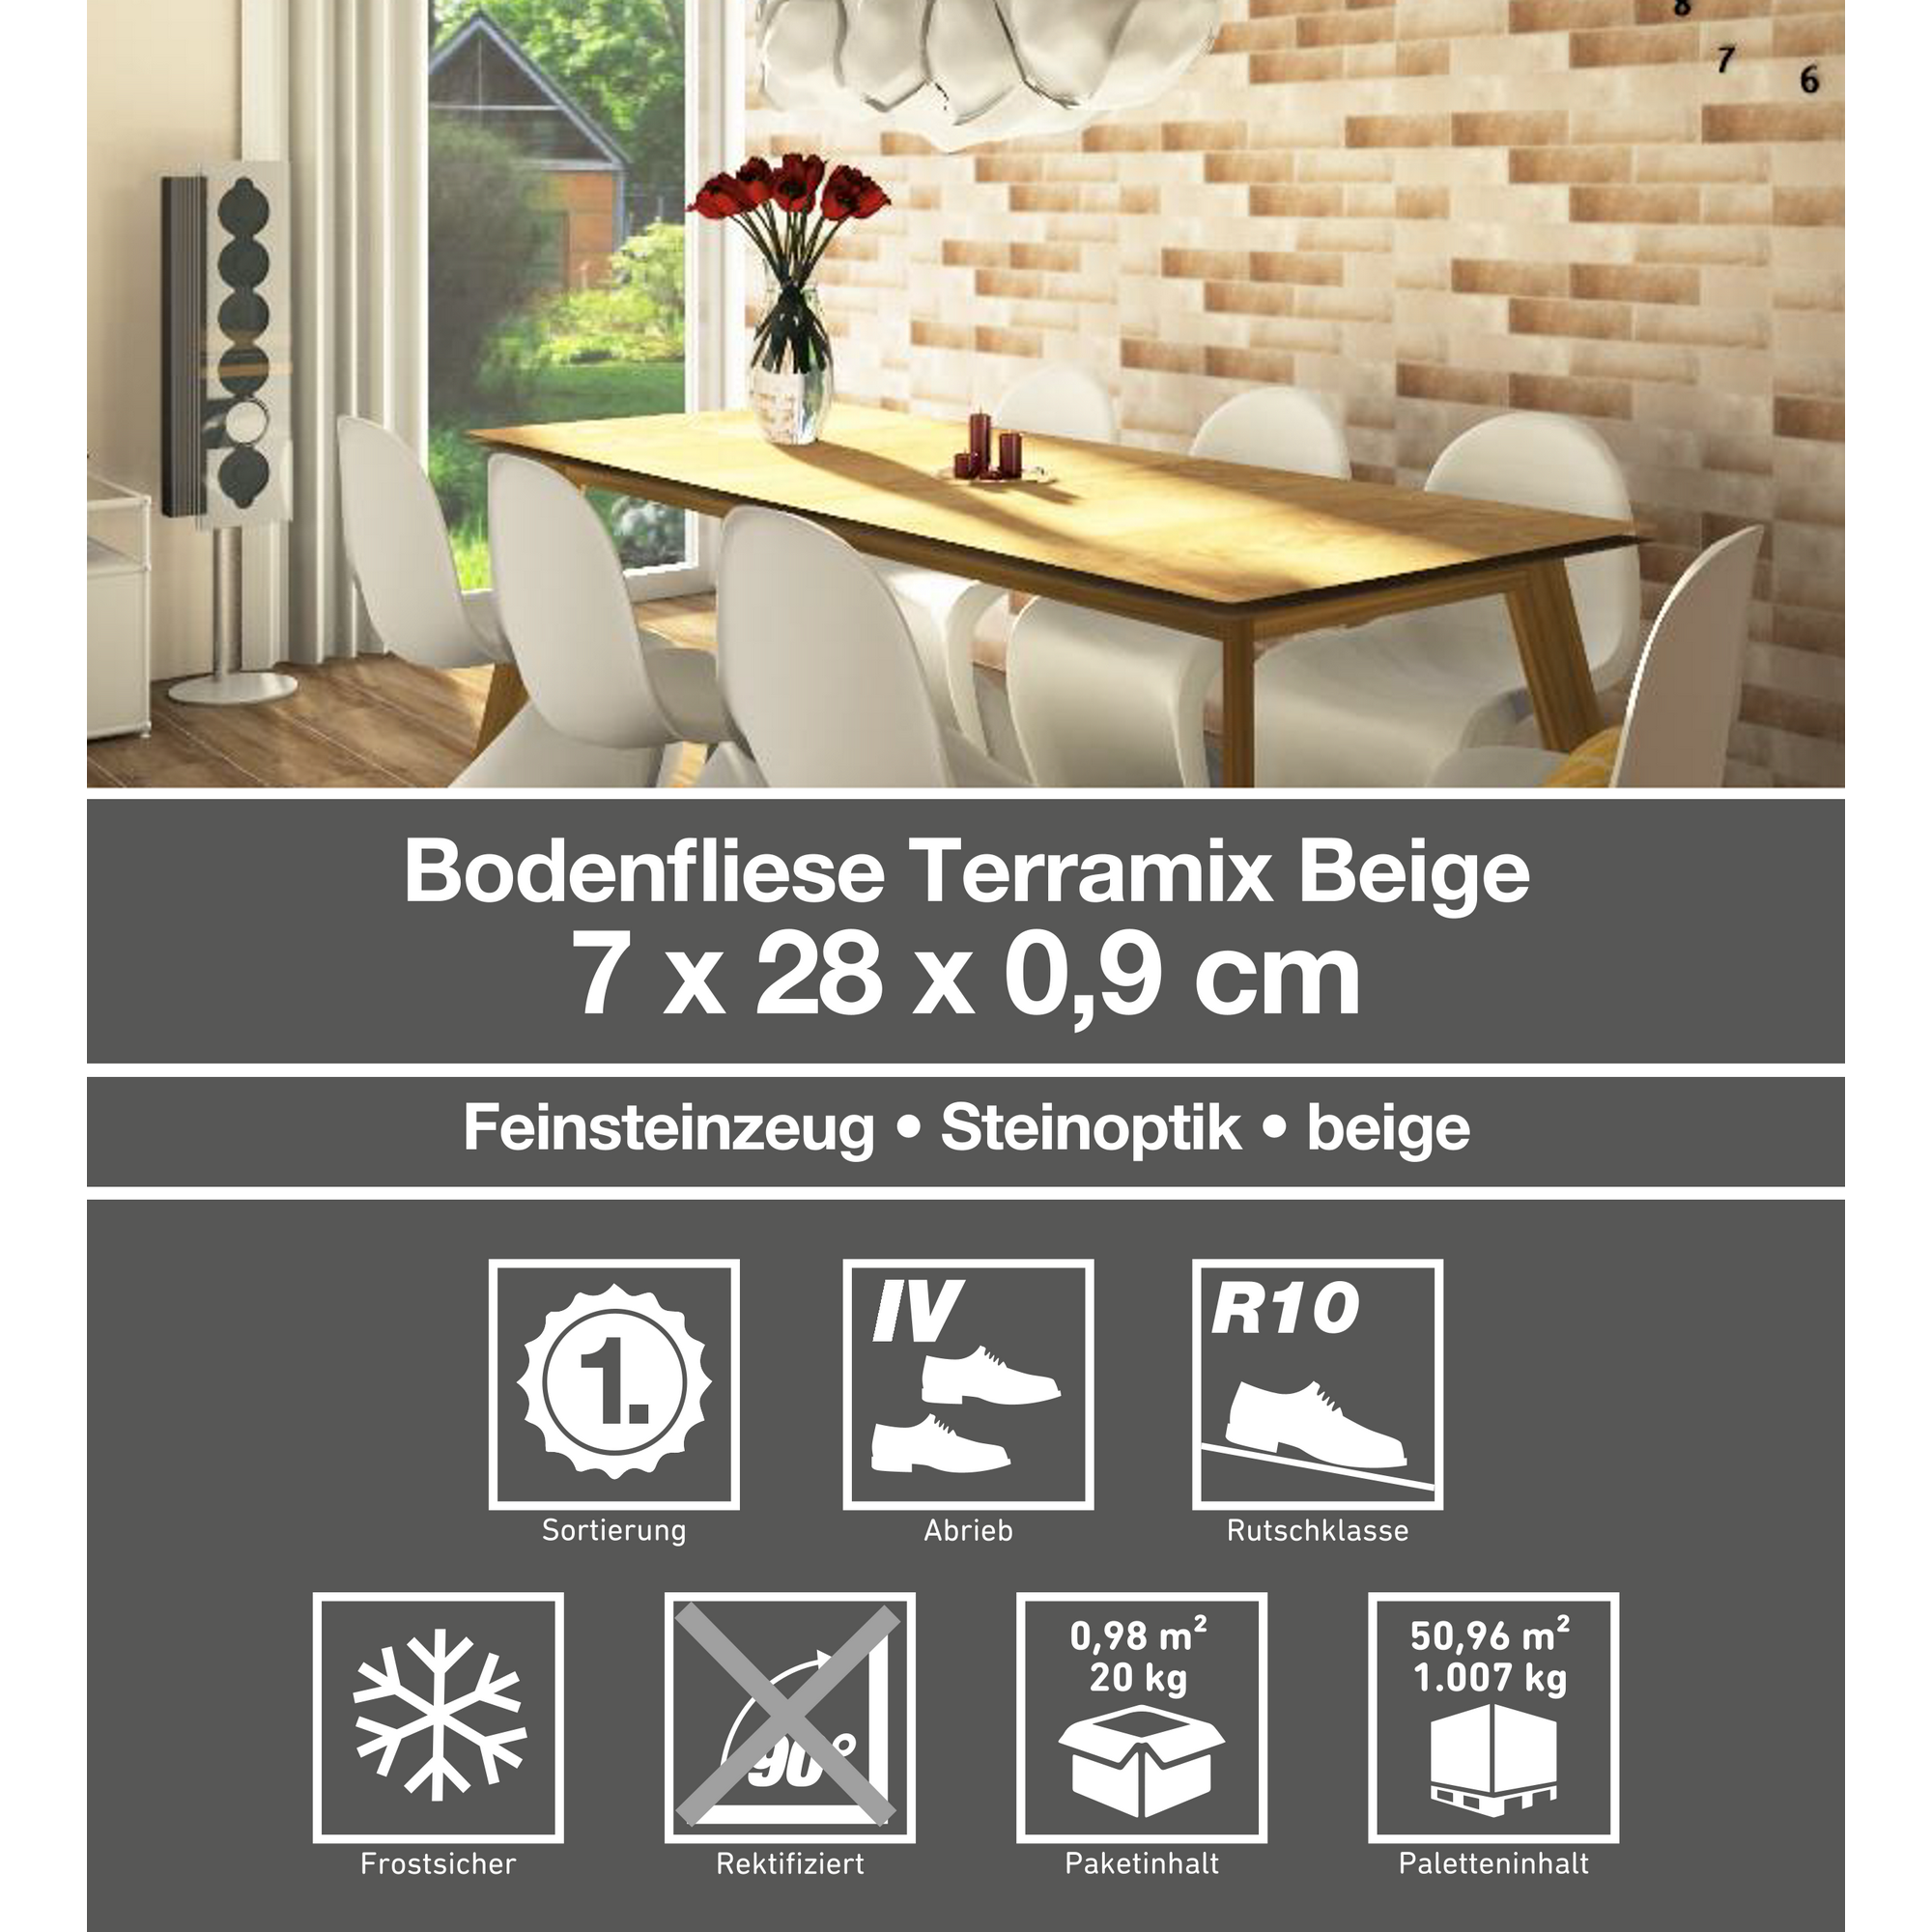 Bodenfliese 'Terramix' Feinsteinzeug beige 7 x 28 cm + product picture